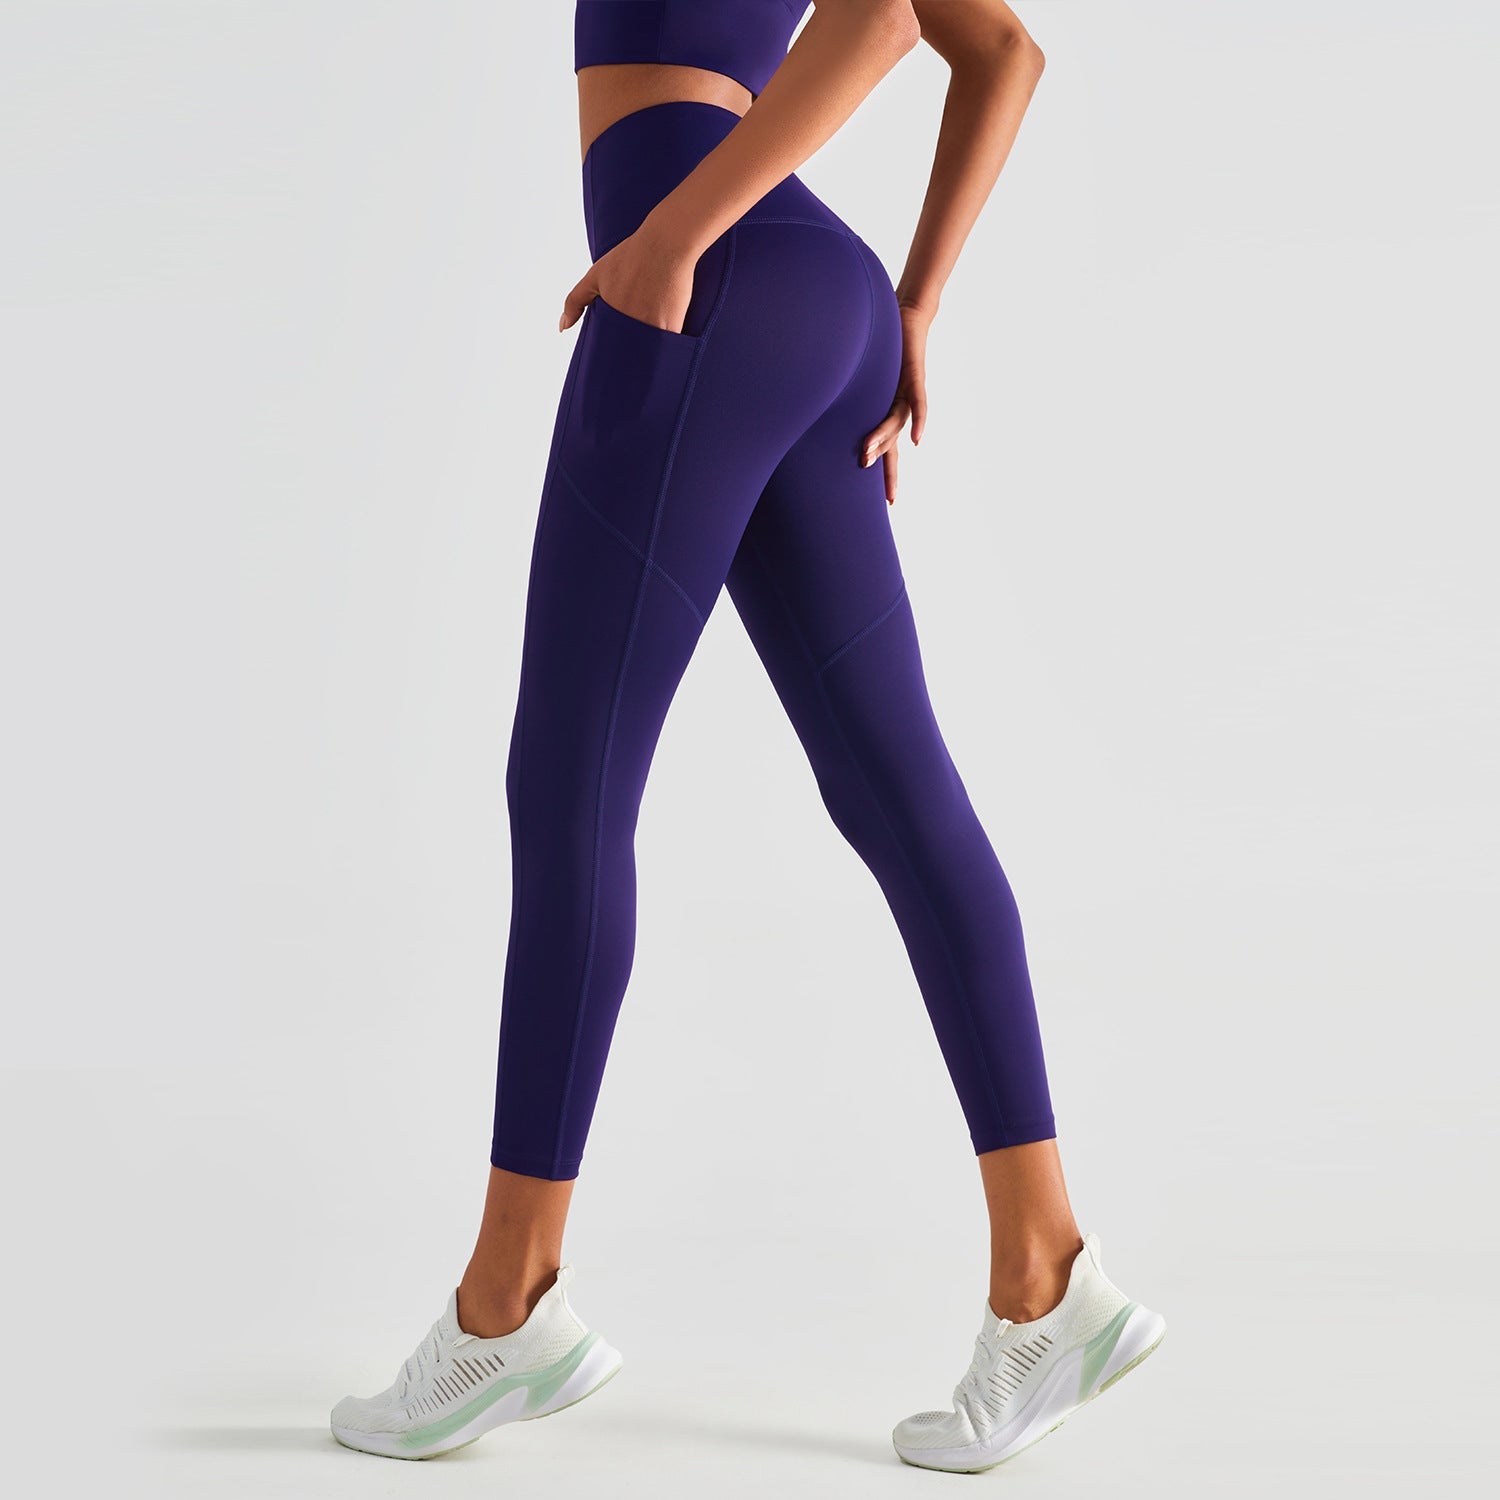 Women Tight Hip Lift Seamless High Waist Fitness Pants 7/8 Leggings with Pockets CK1414